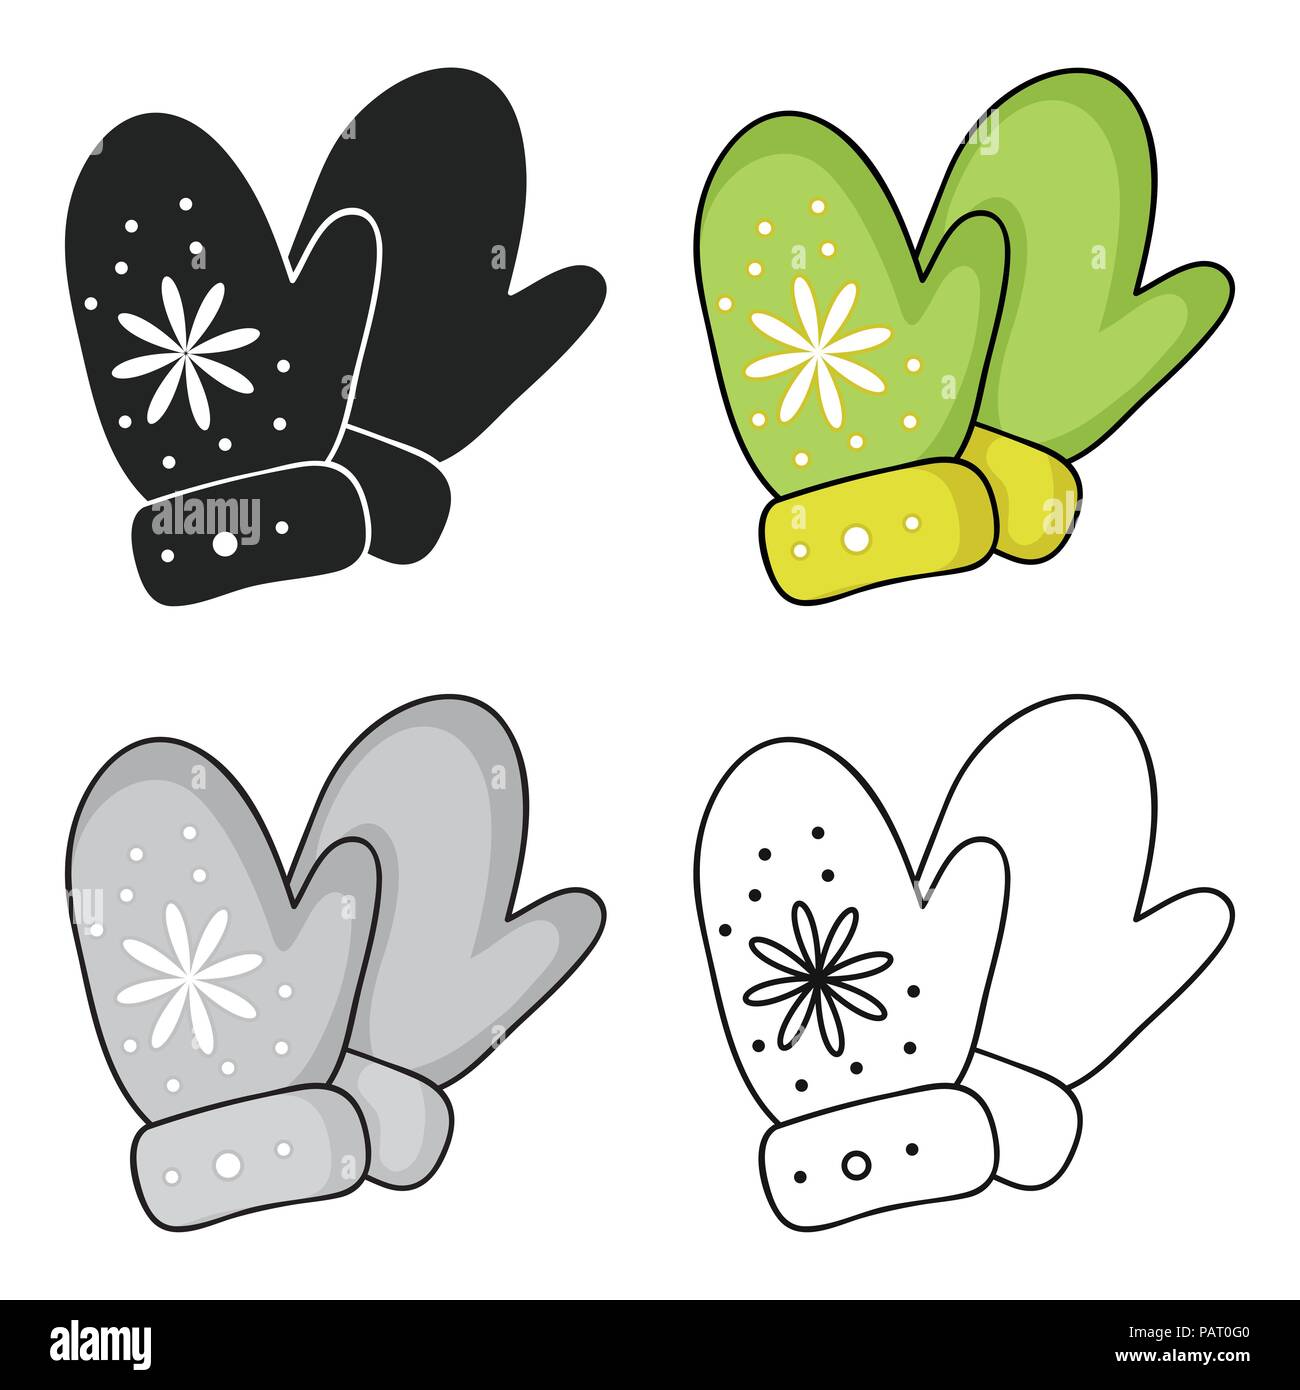 Handschuhe Symbol im Comic-stil auf weißem Hintergrund. Skigebiet symbol  Vektor Illustration Stock-Vektorgrafik - Alamy